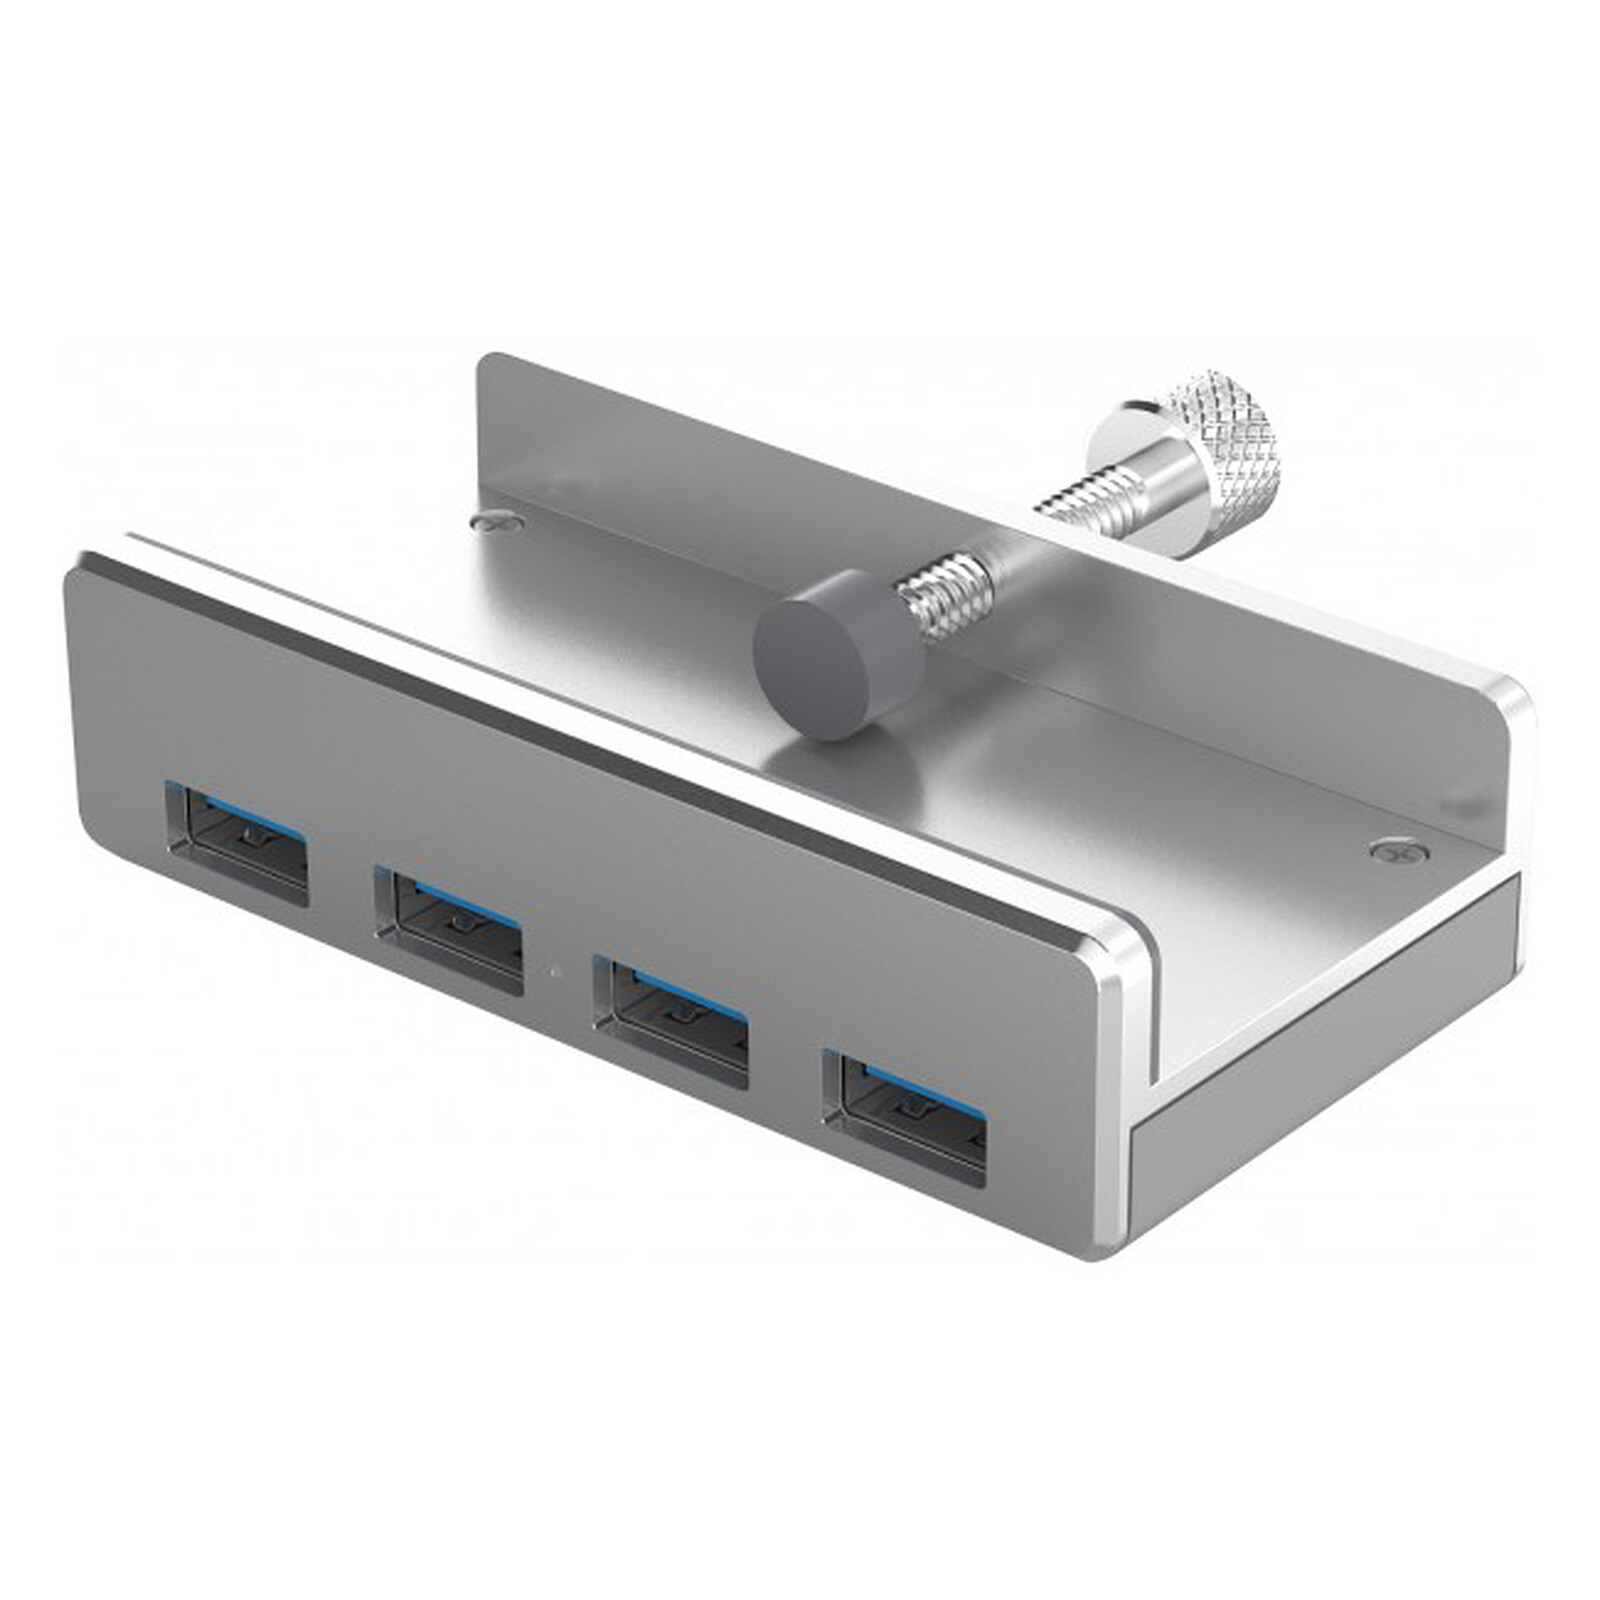 Hub USB 3.0 avec 4 ports USB-A - alimentation USB-C supplémentaire - noir -  Orico